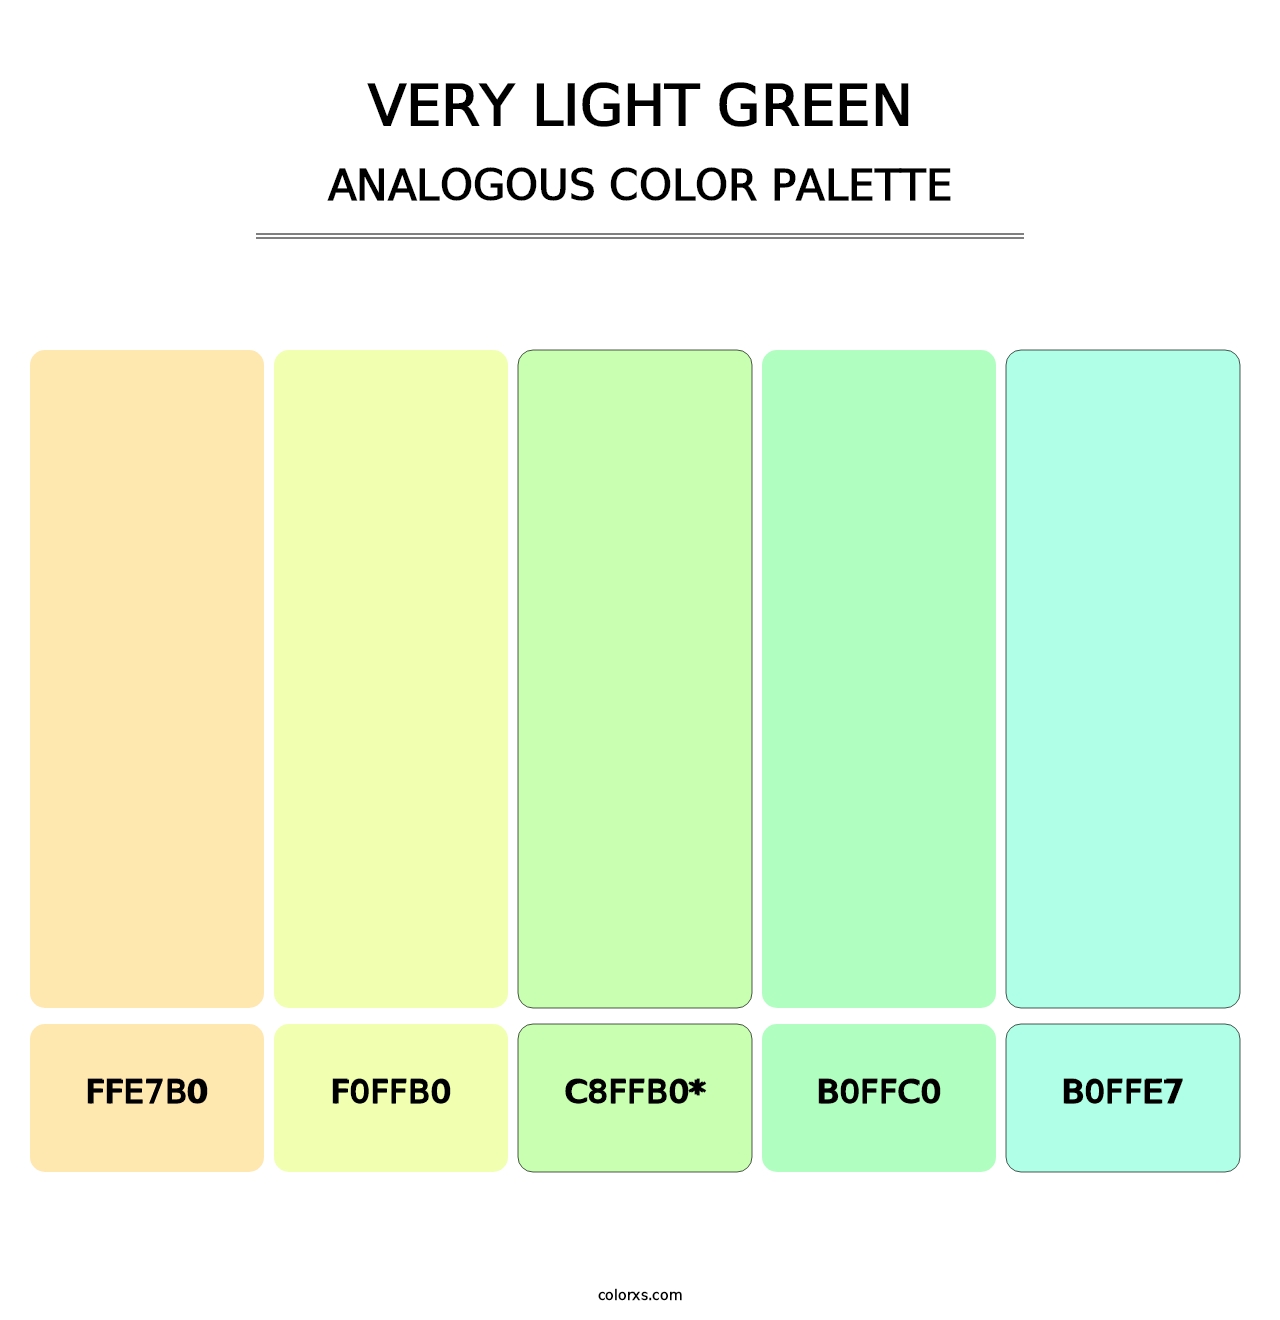 Very Light Green - Analogous Color Palette